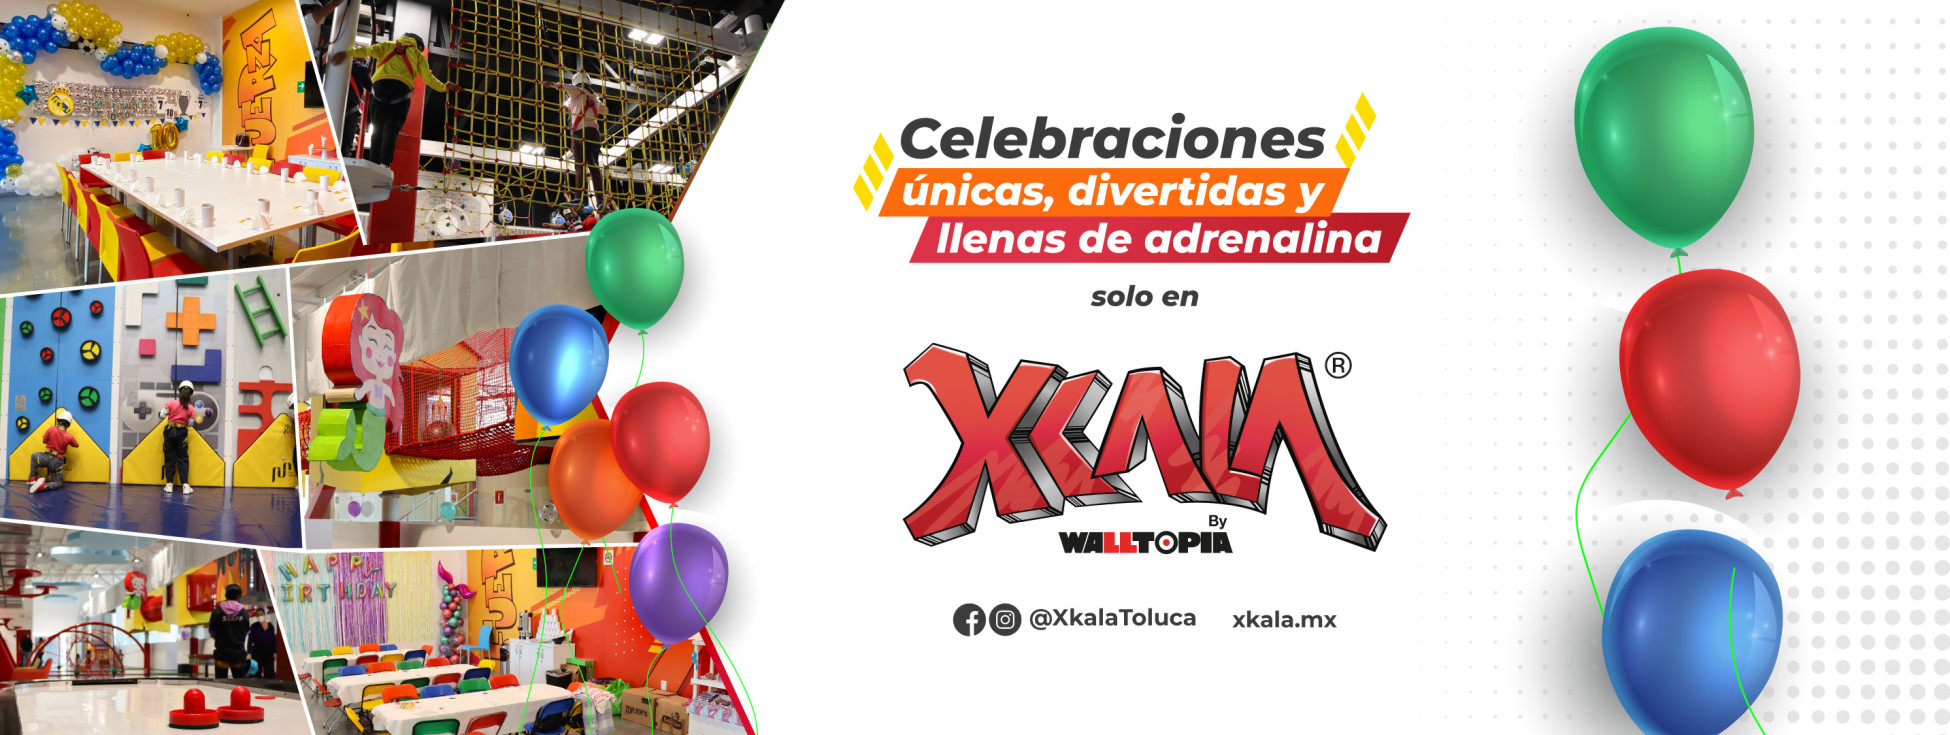 banner-web-xkala-celebraciones.jpg